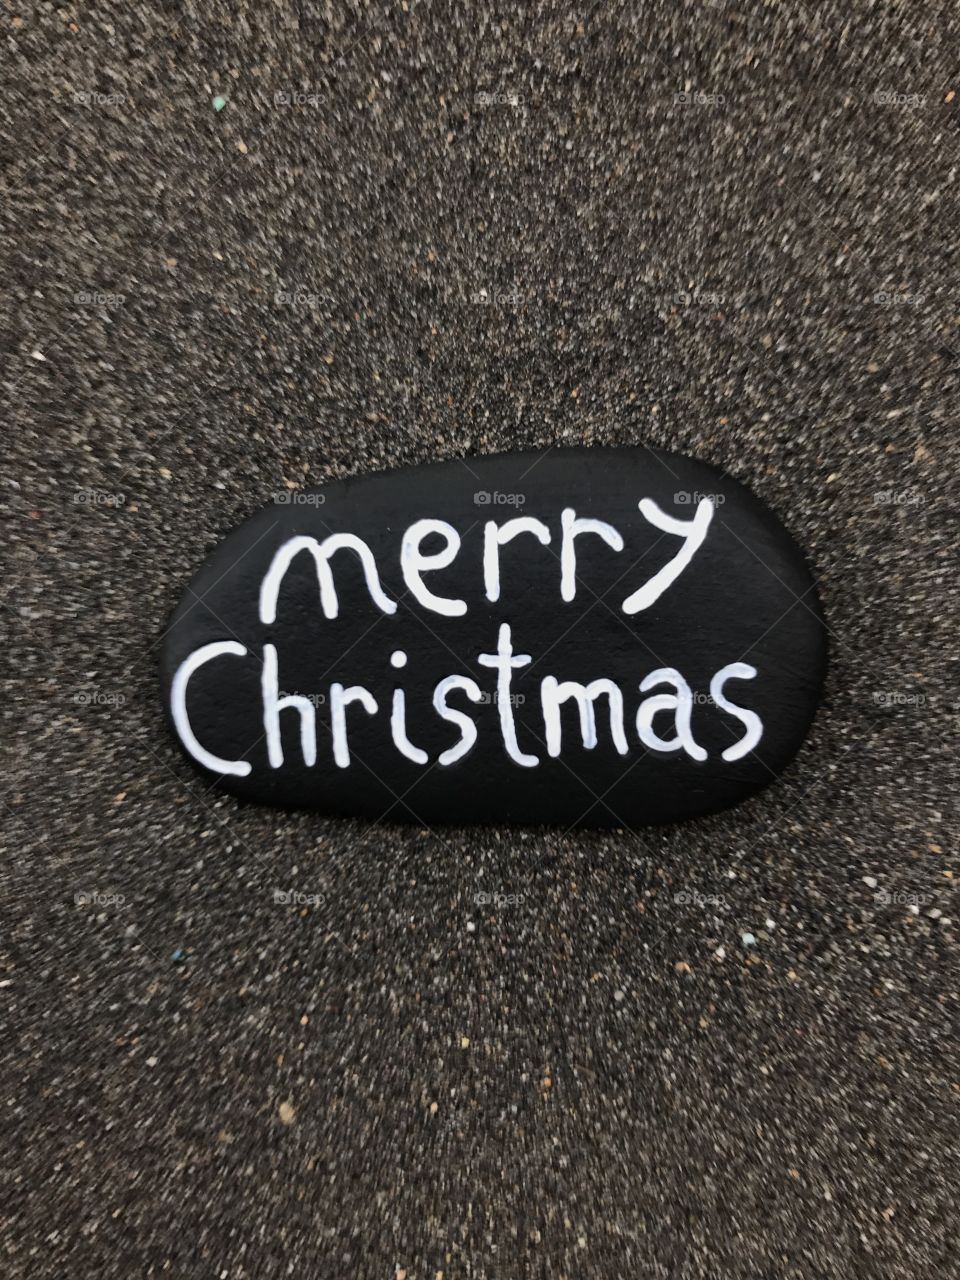 Merry Christmas on a black stone over volcanic black sand 